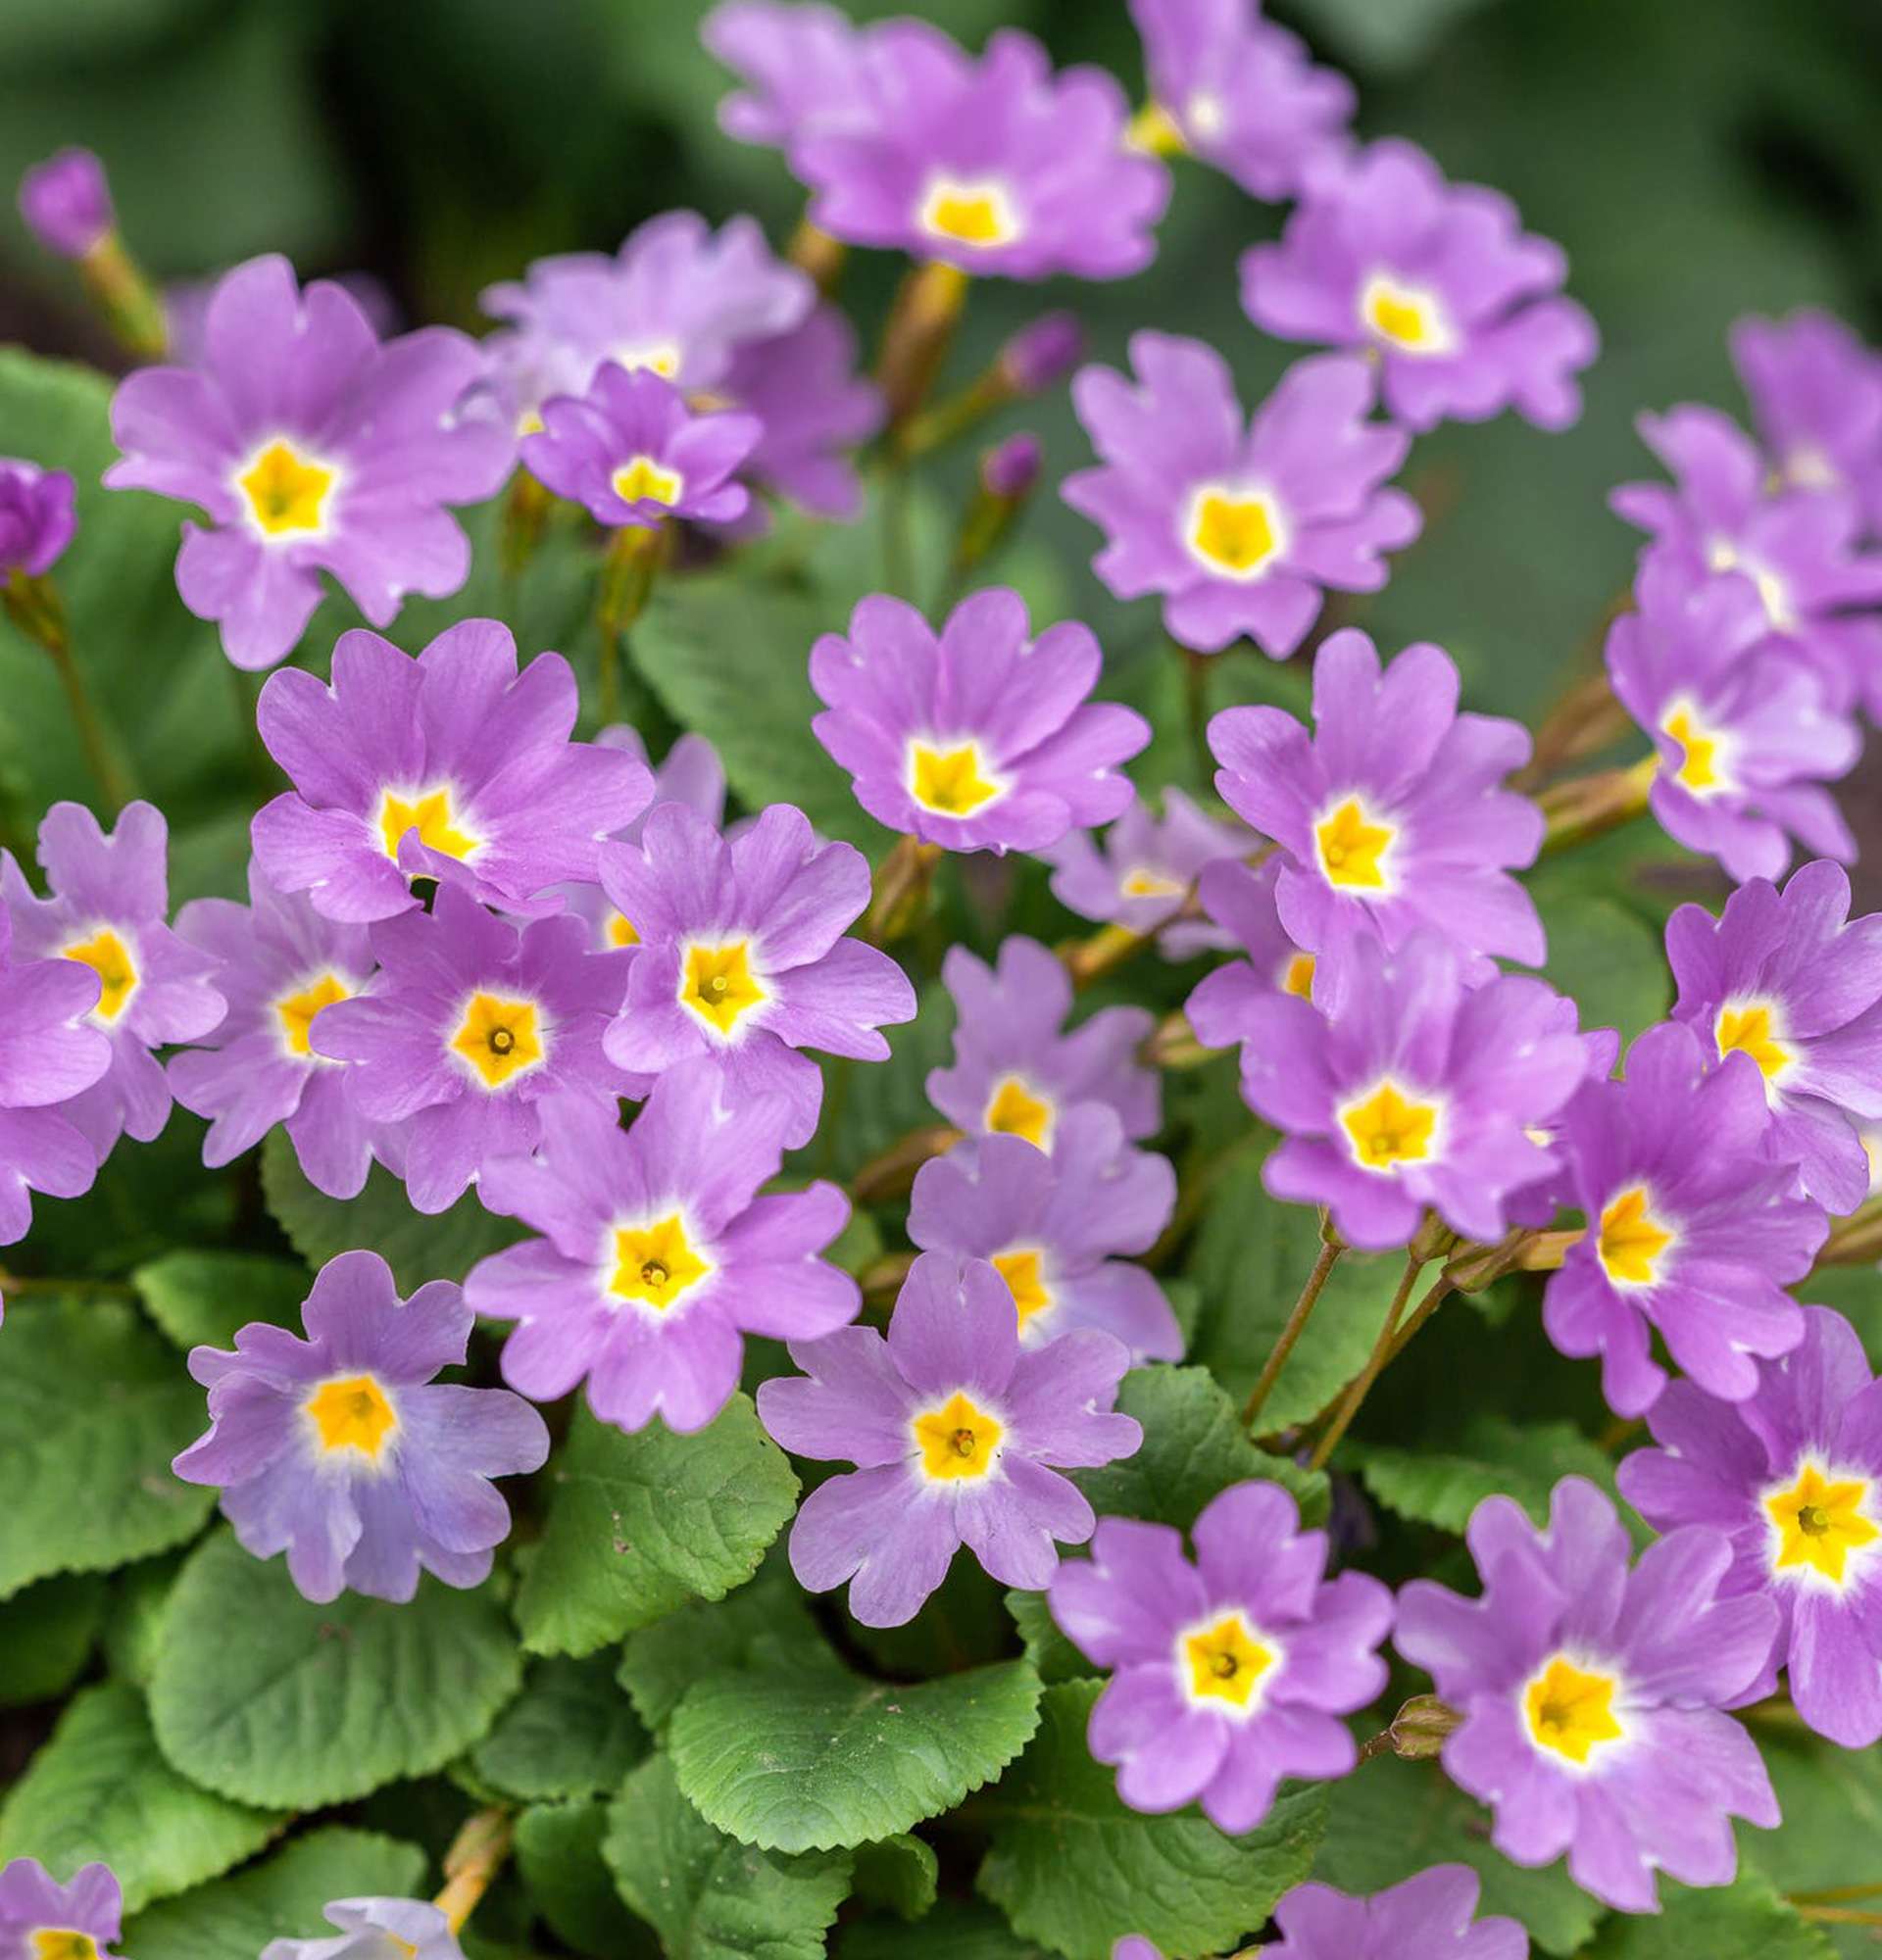 primrose lilac photo - garden flowers